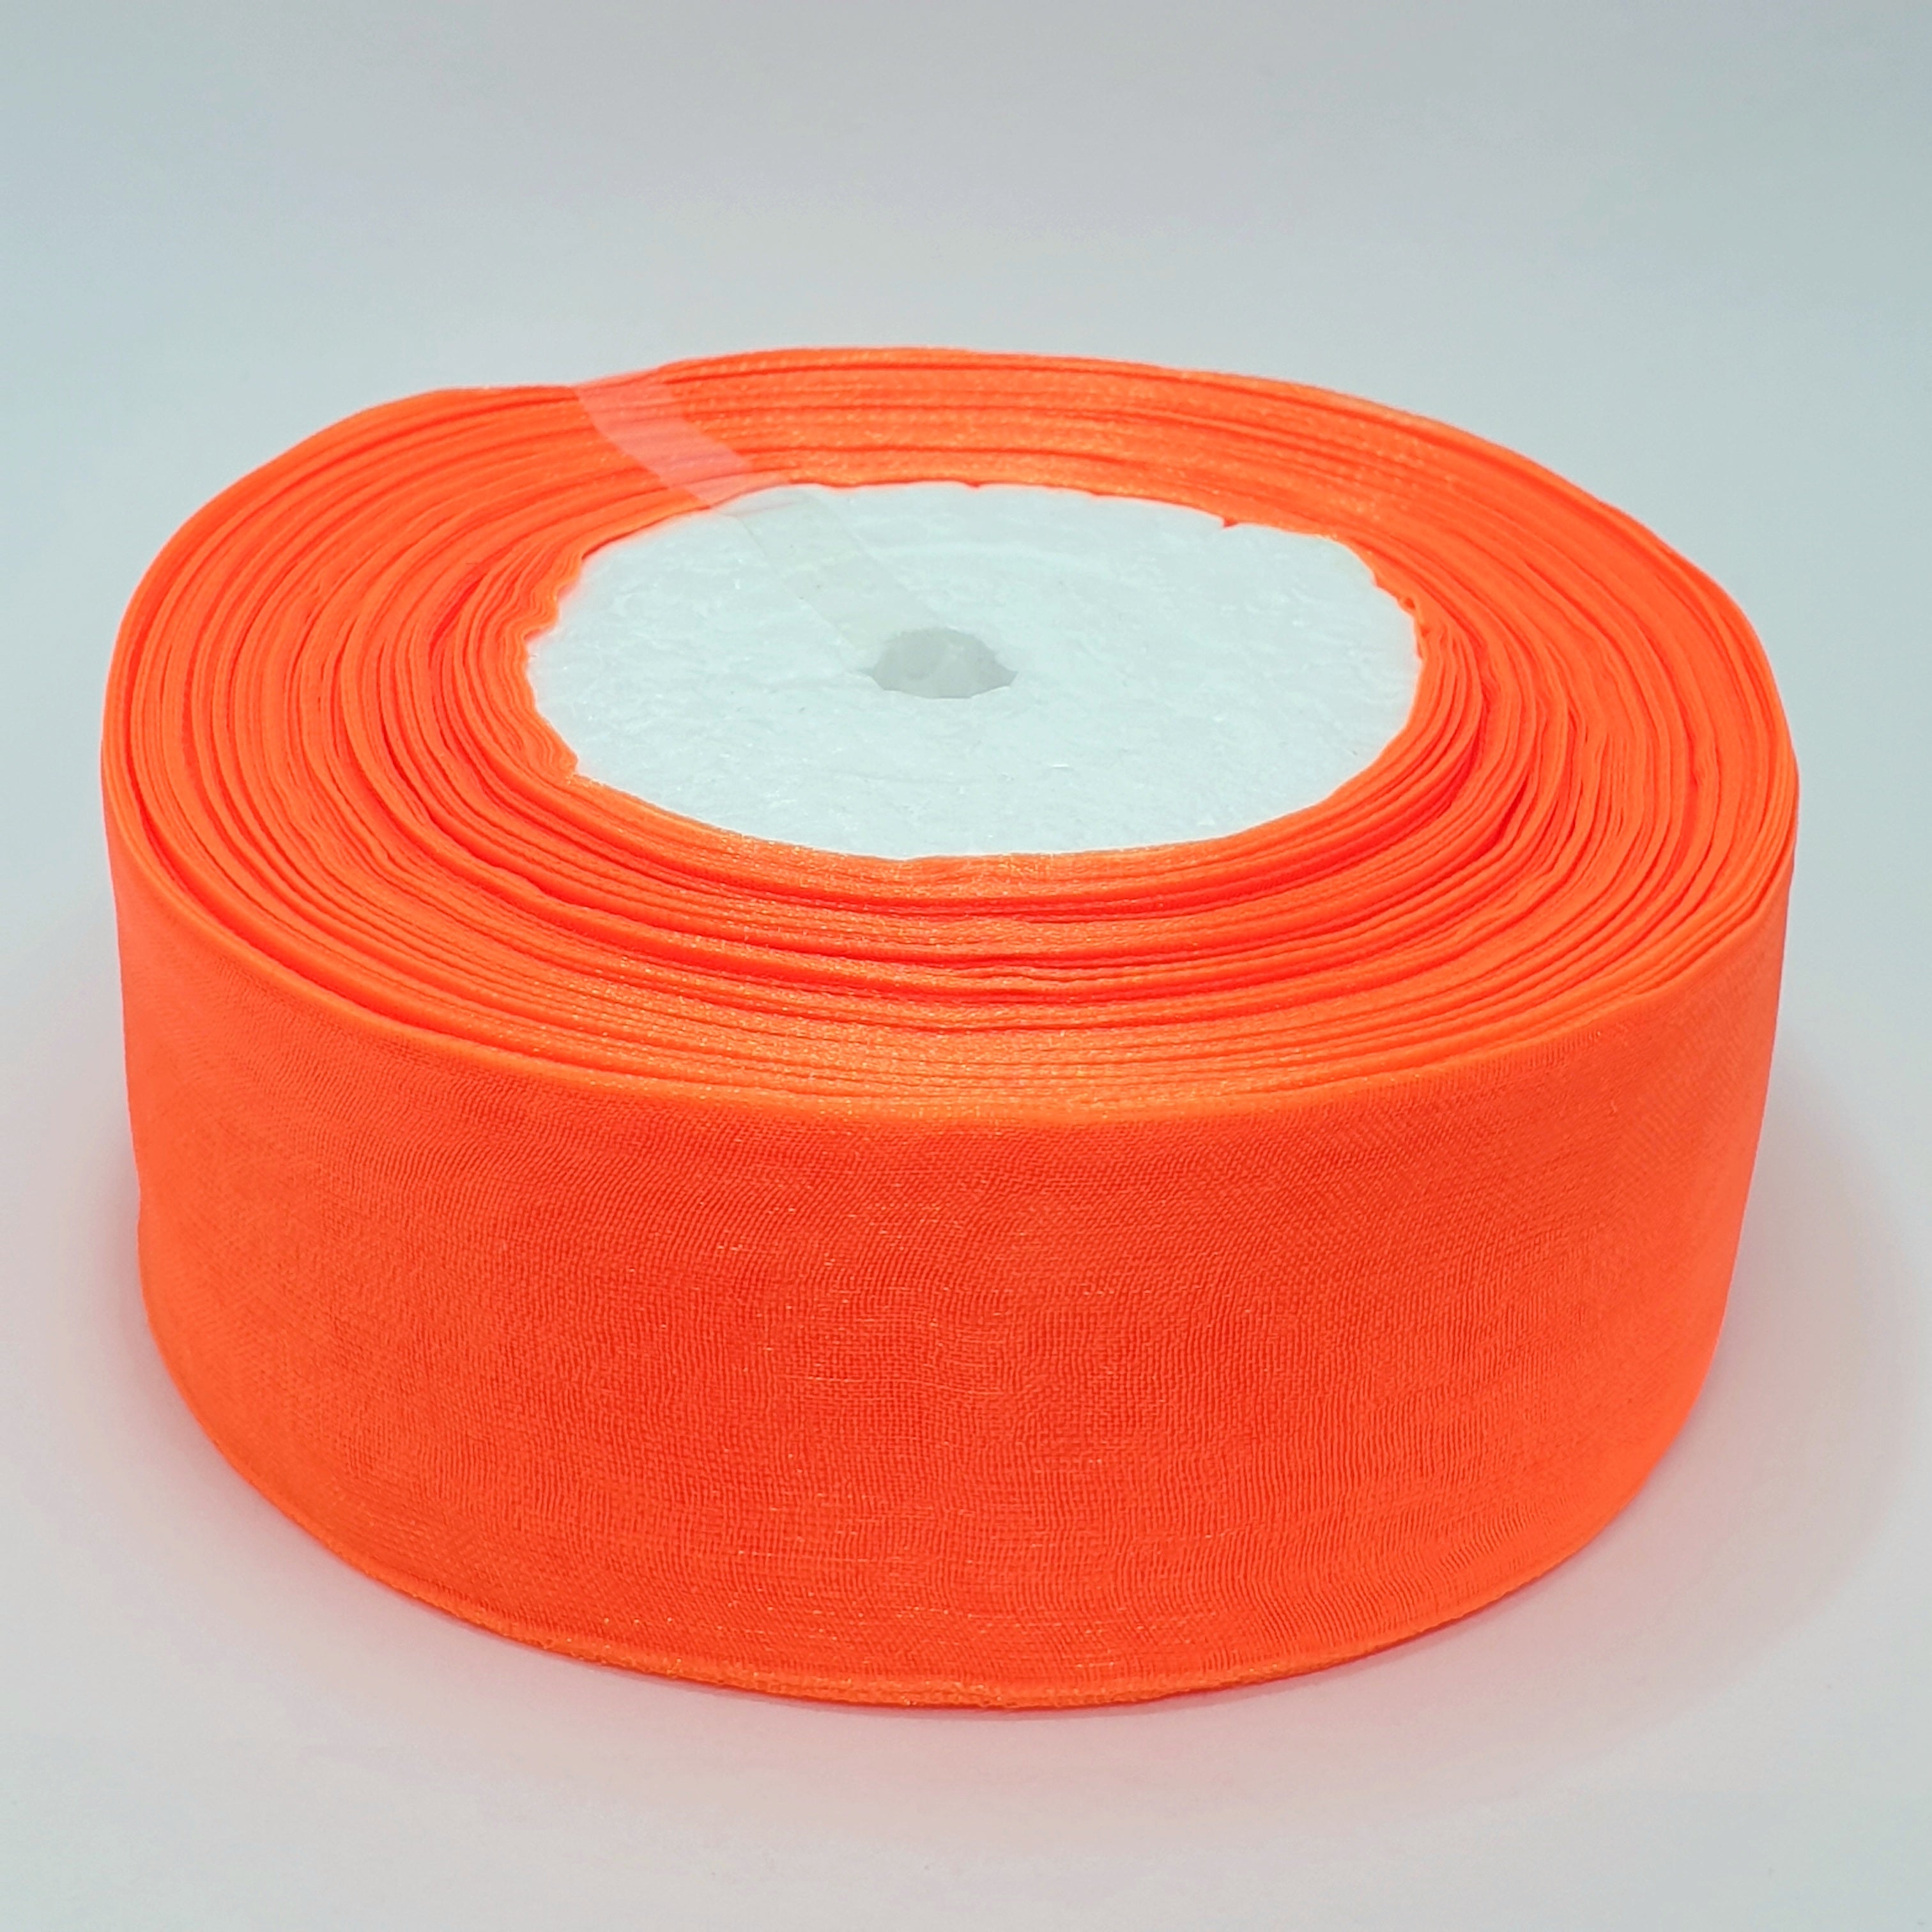 MajorCrafts 40mm 45metres Bright Orange Sheer Organza Fabric Ribbon Roll R1023